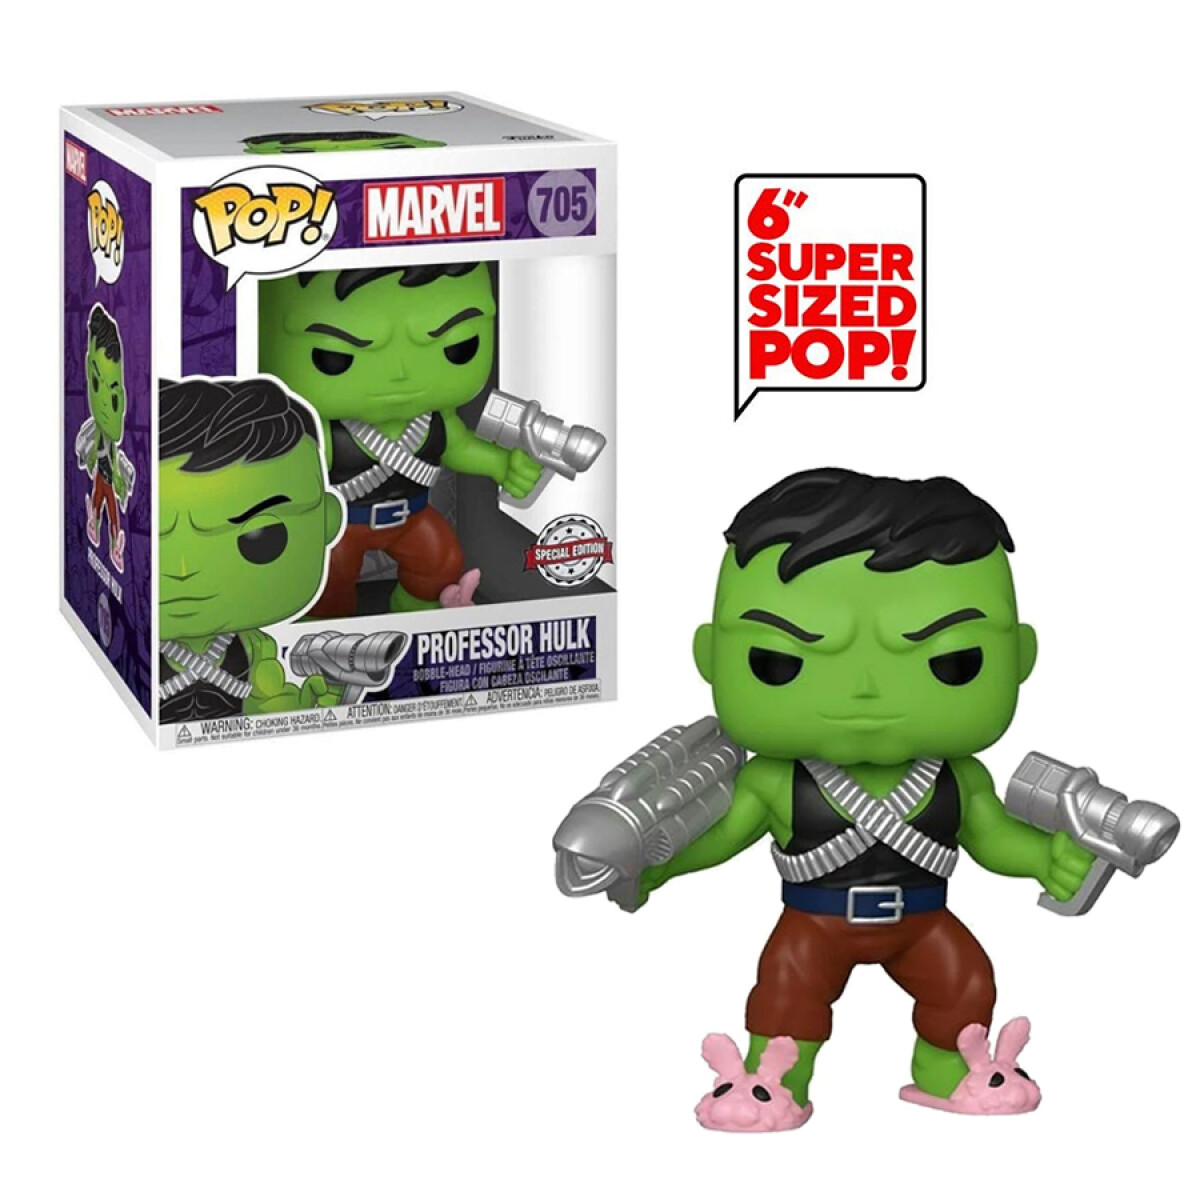 Professor Hulk [Exclusivo - 6 Pulgadas] · Marvel - 705 